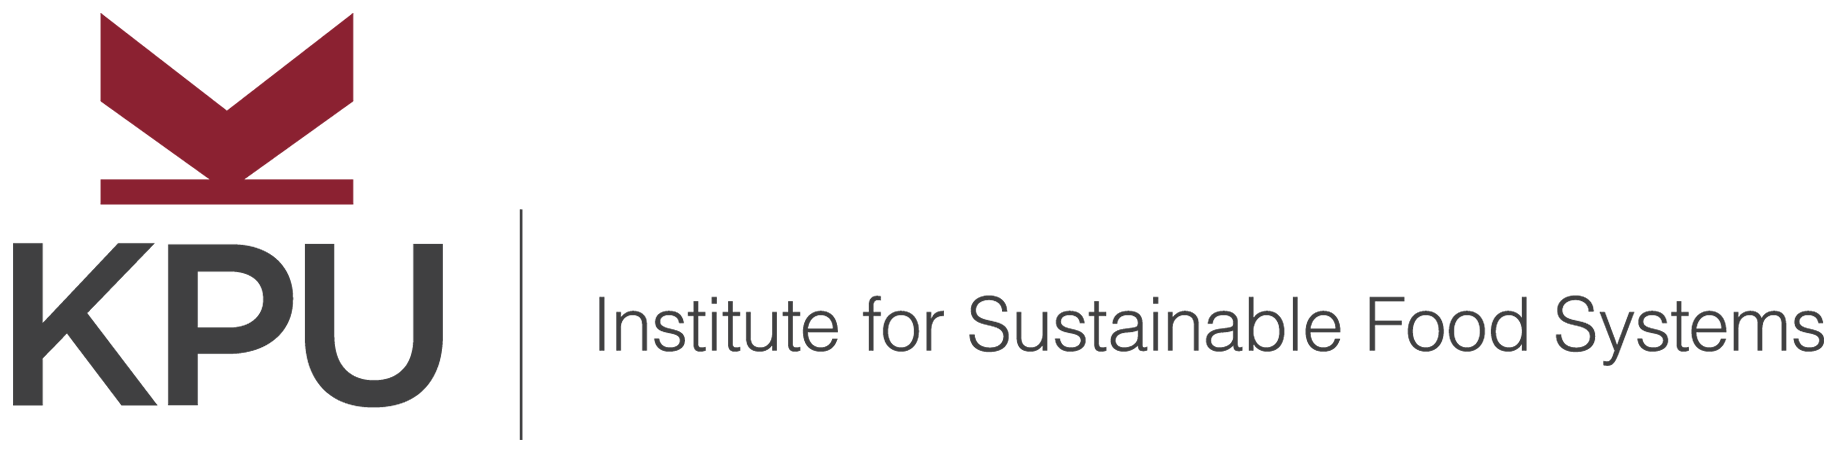 KPU ISFS logo